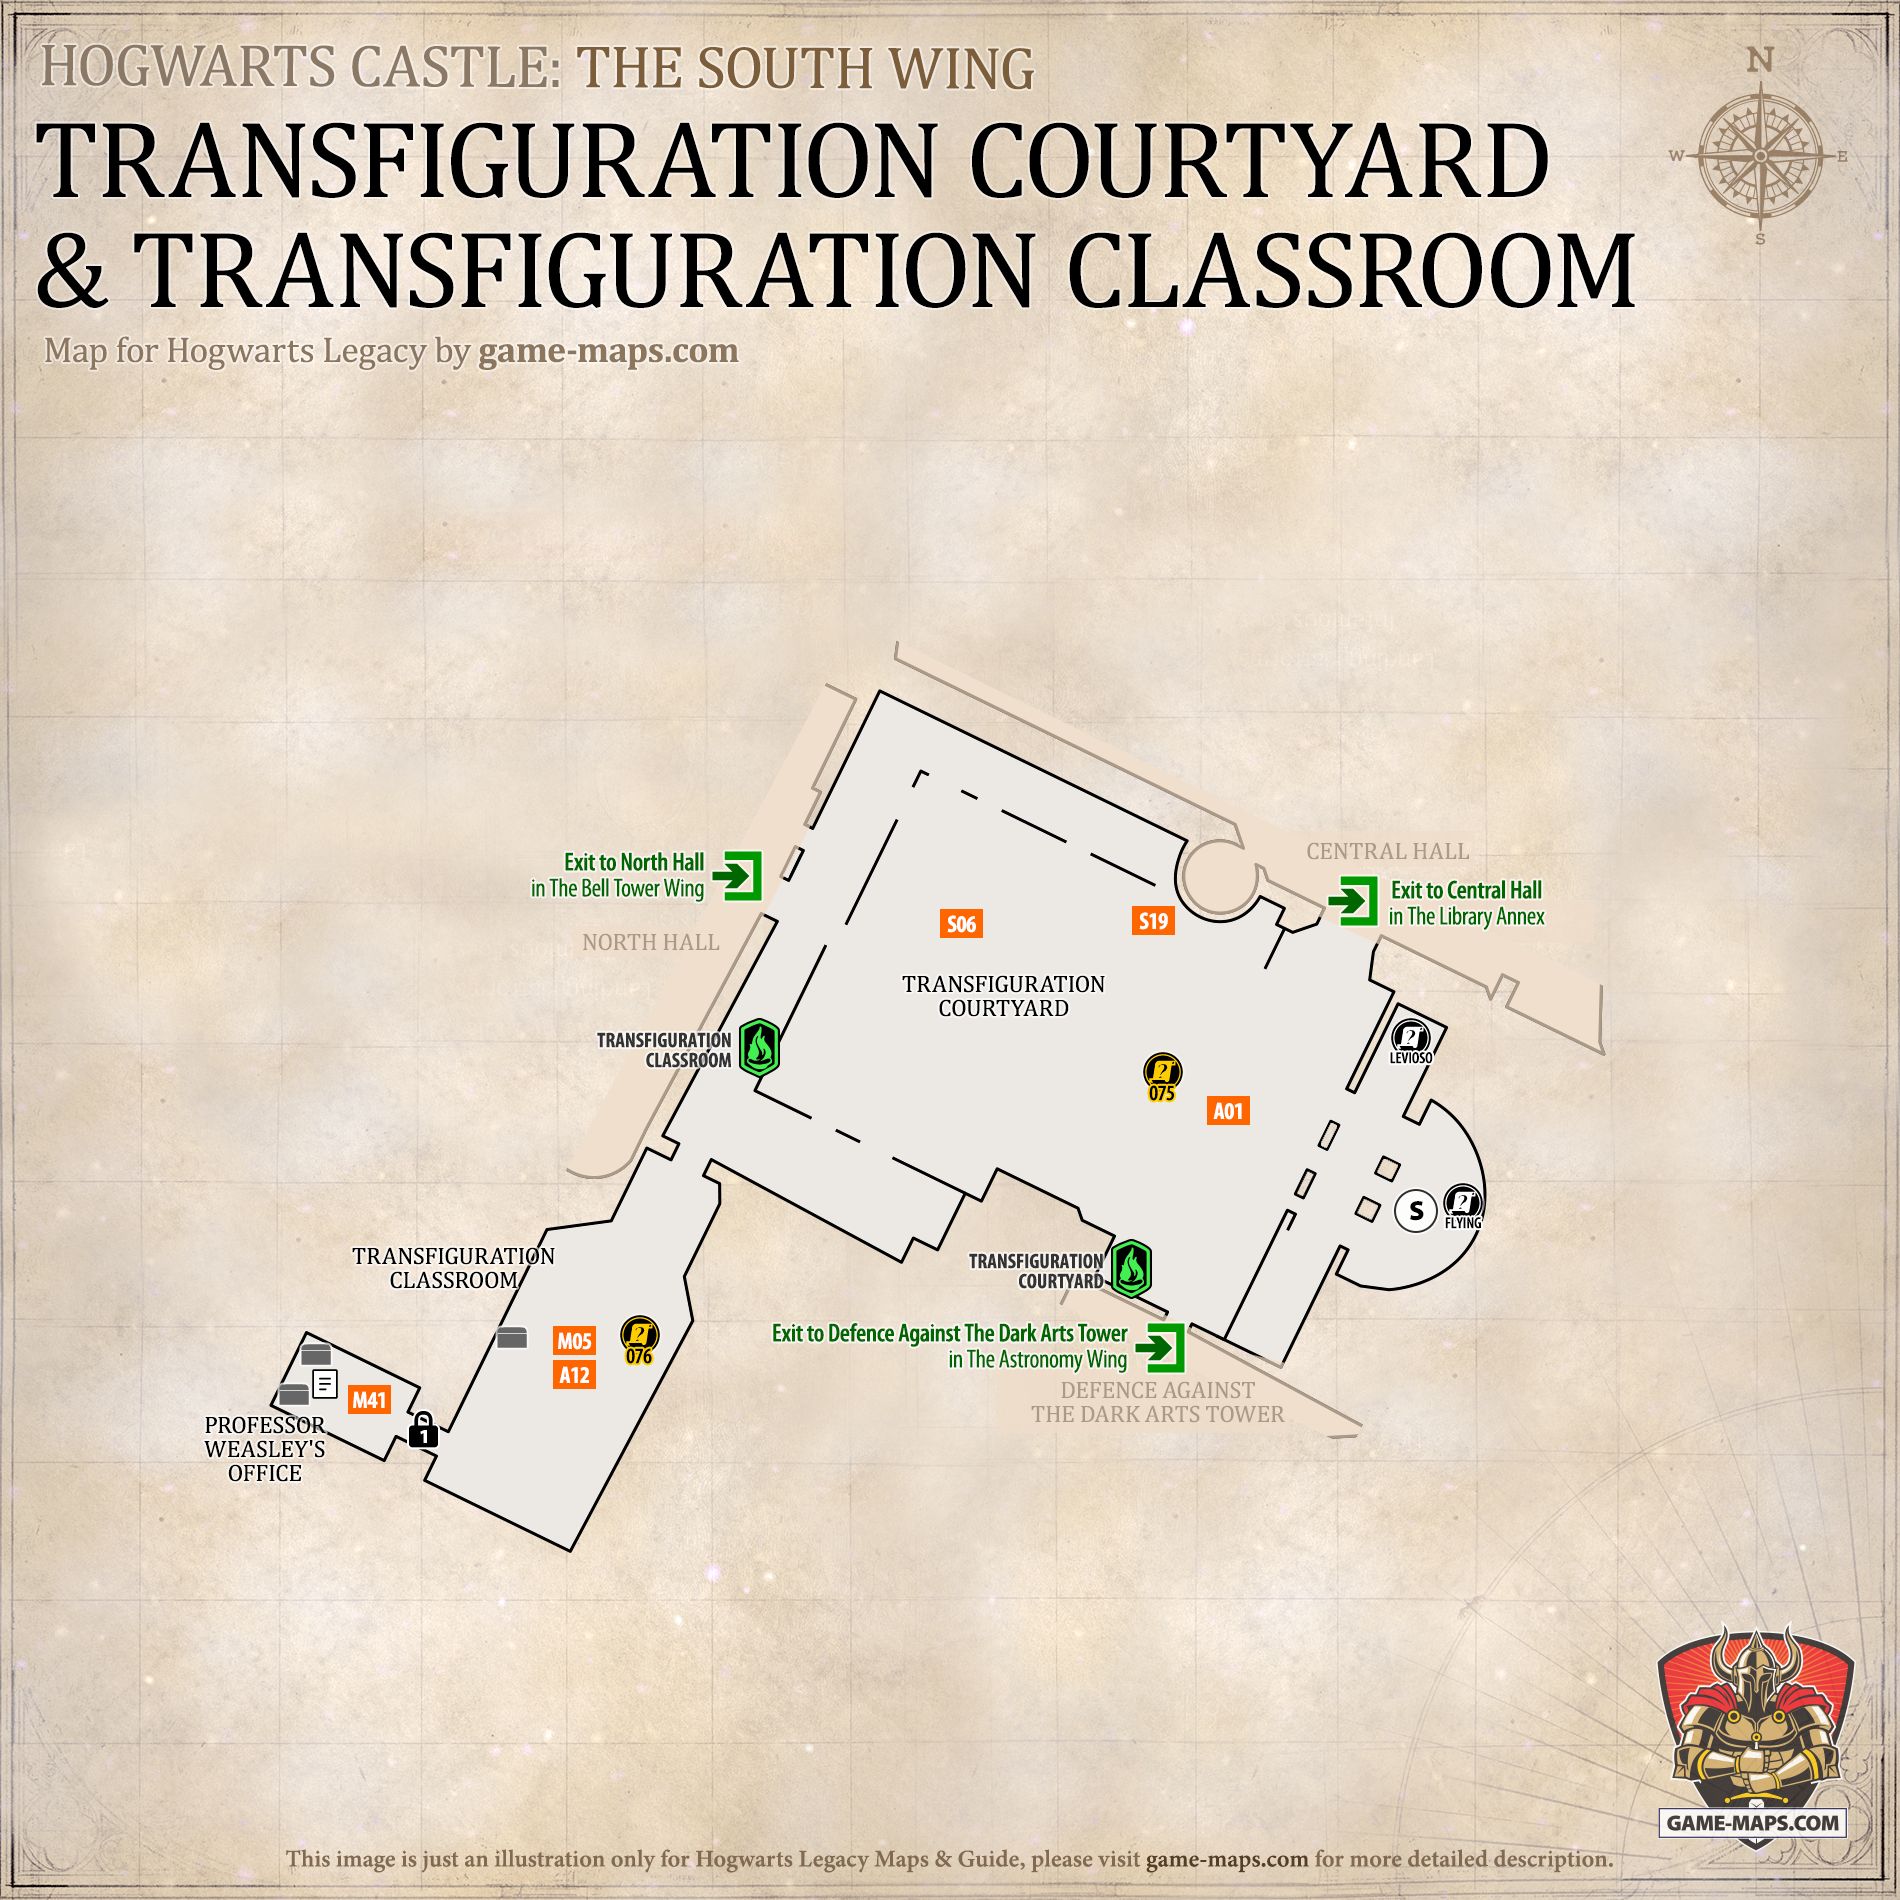 Transfiguration Courtyard Map for Hogwarts Legacy